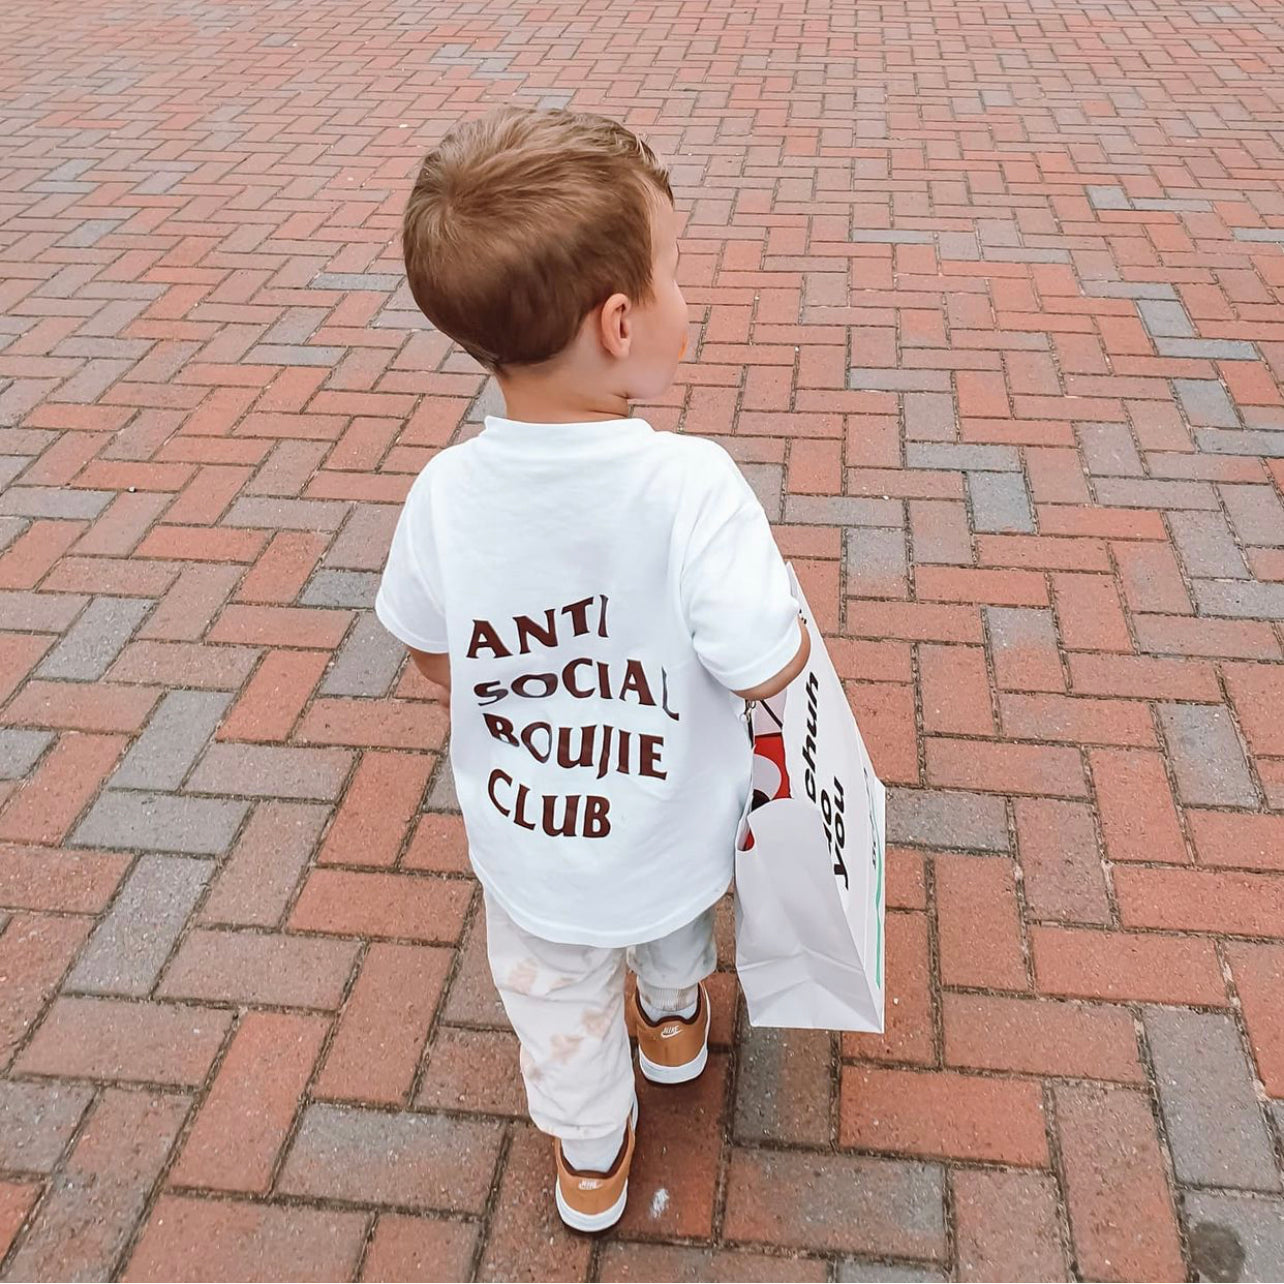 Anti Social Boujie Club T shirt (BH)